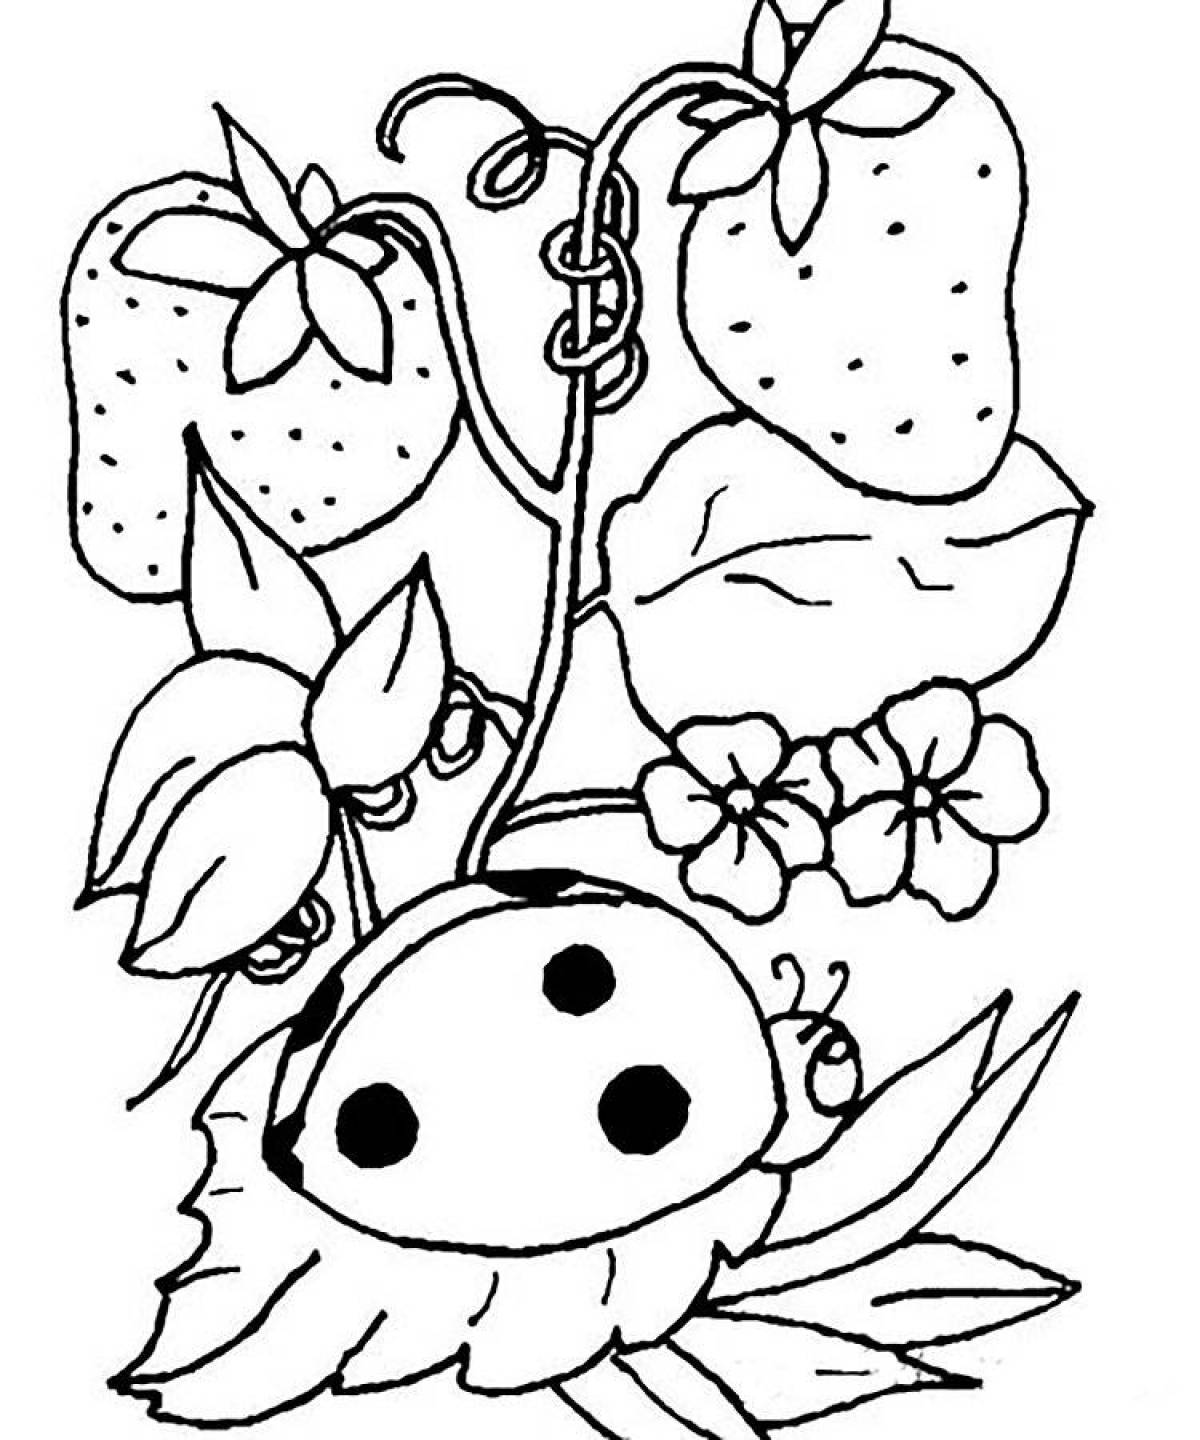 Coloring page wonderful cauliflower